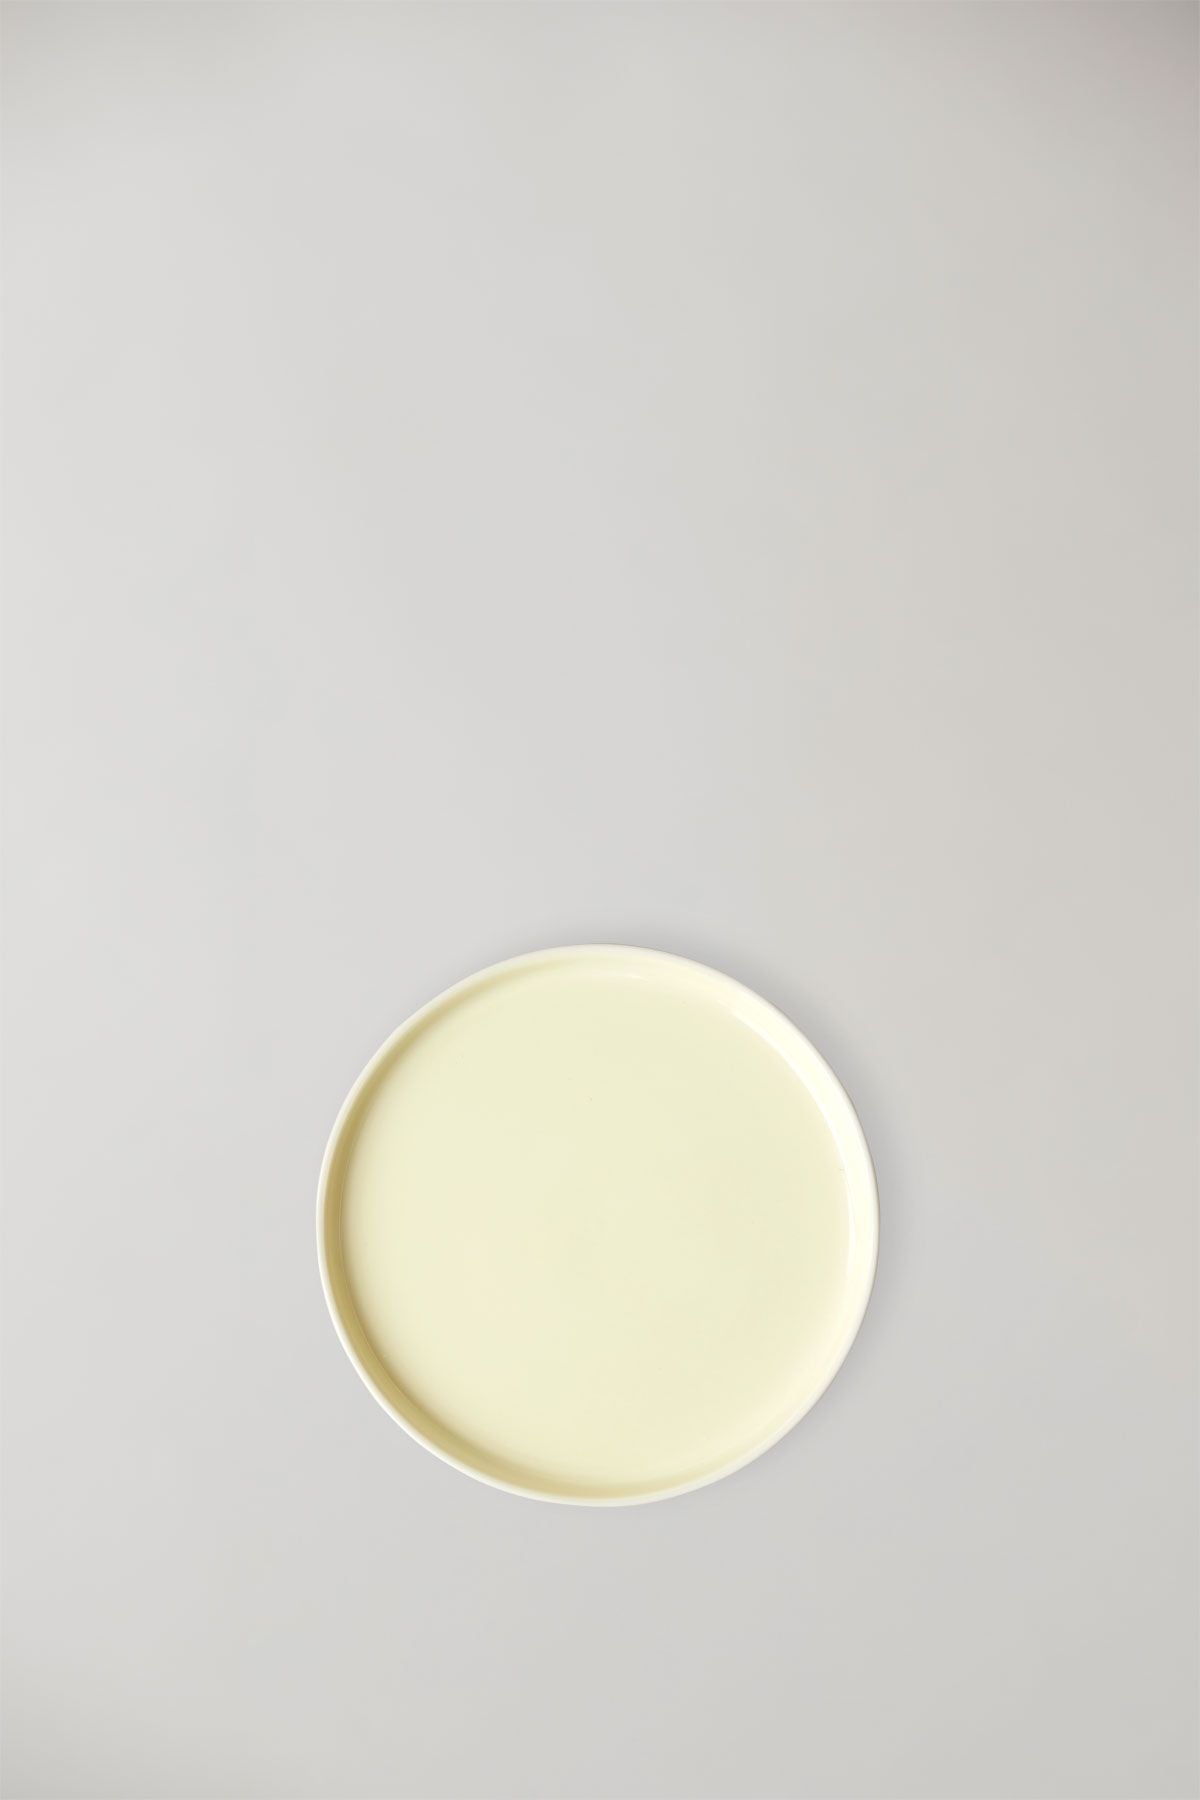 Studio About Clayware Set Of 2 Plates Medium, Ivory/Yellow